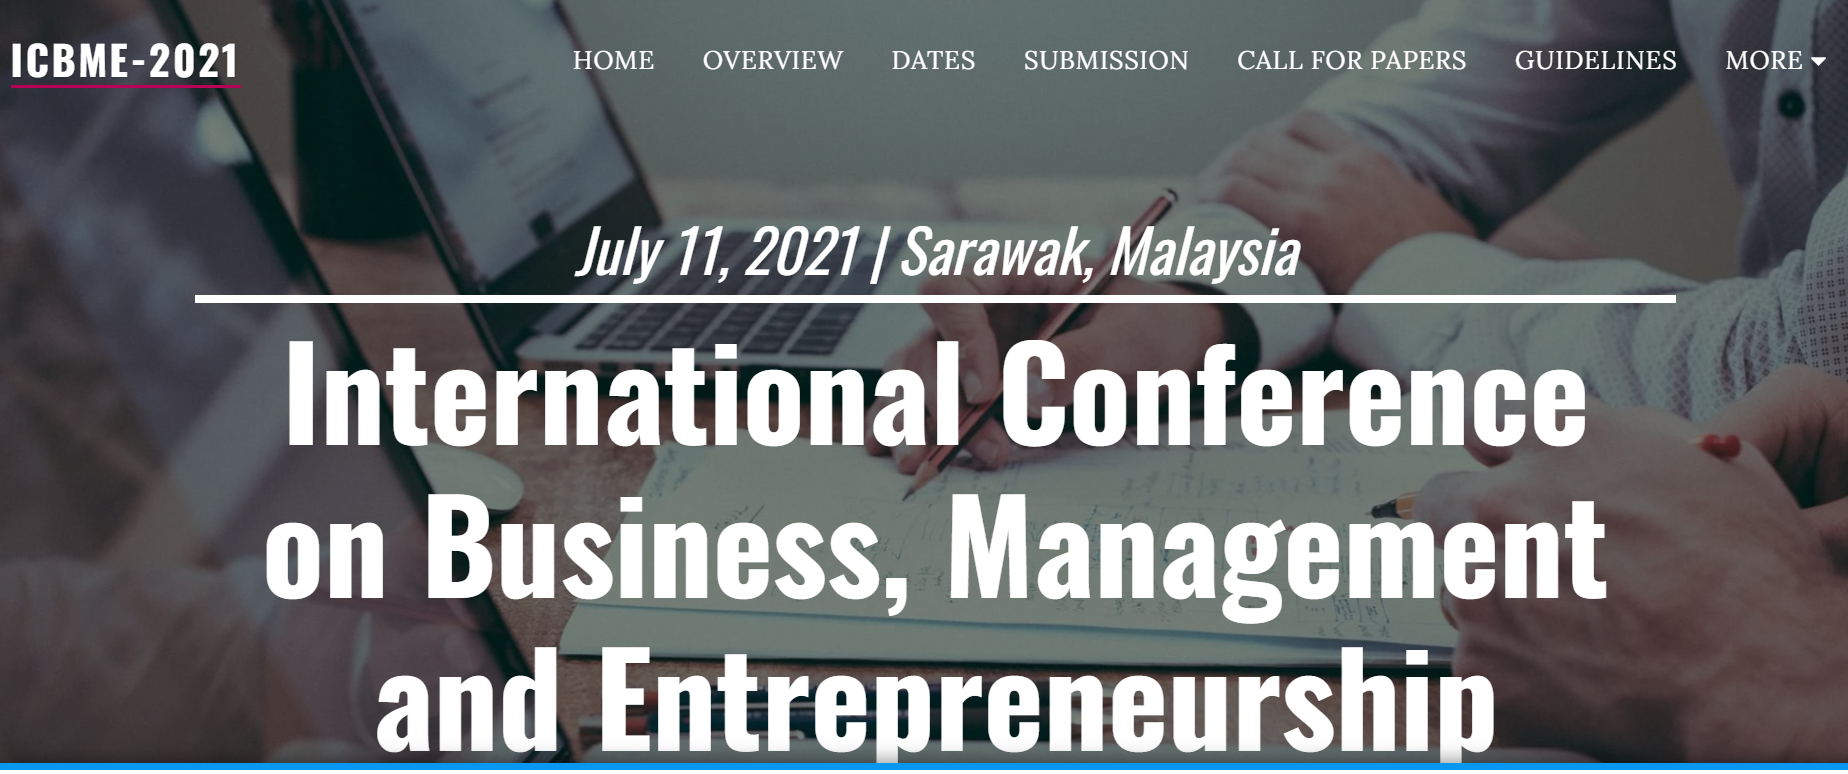 International Conference on Business, Management and Entrepreneurship, Sarawak, Malaysia,Sarawak,Malaysia